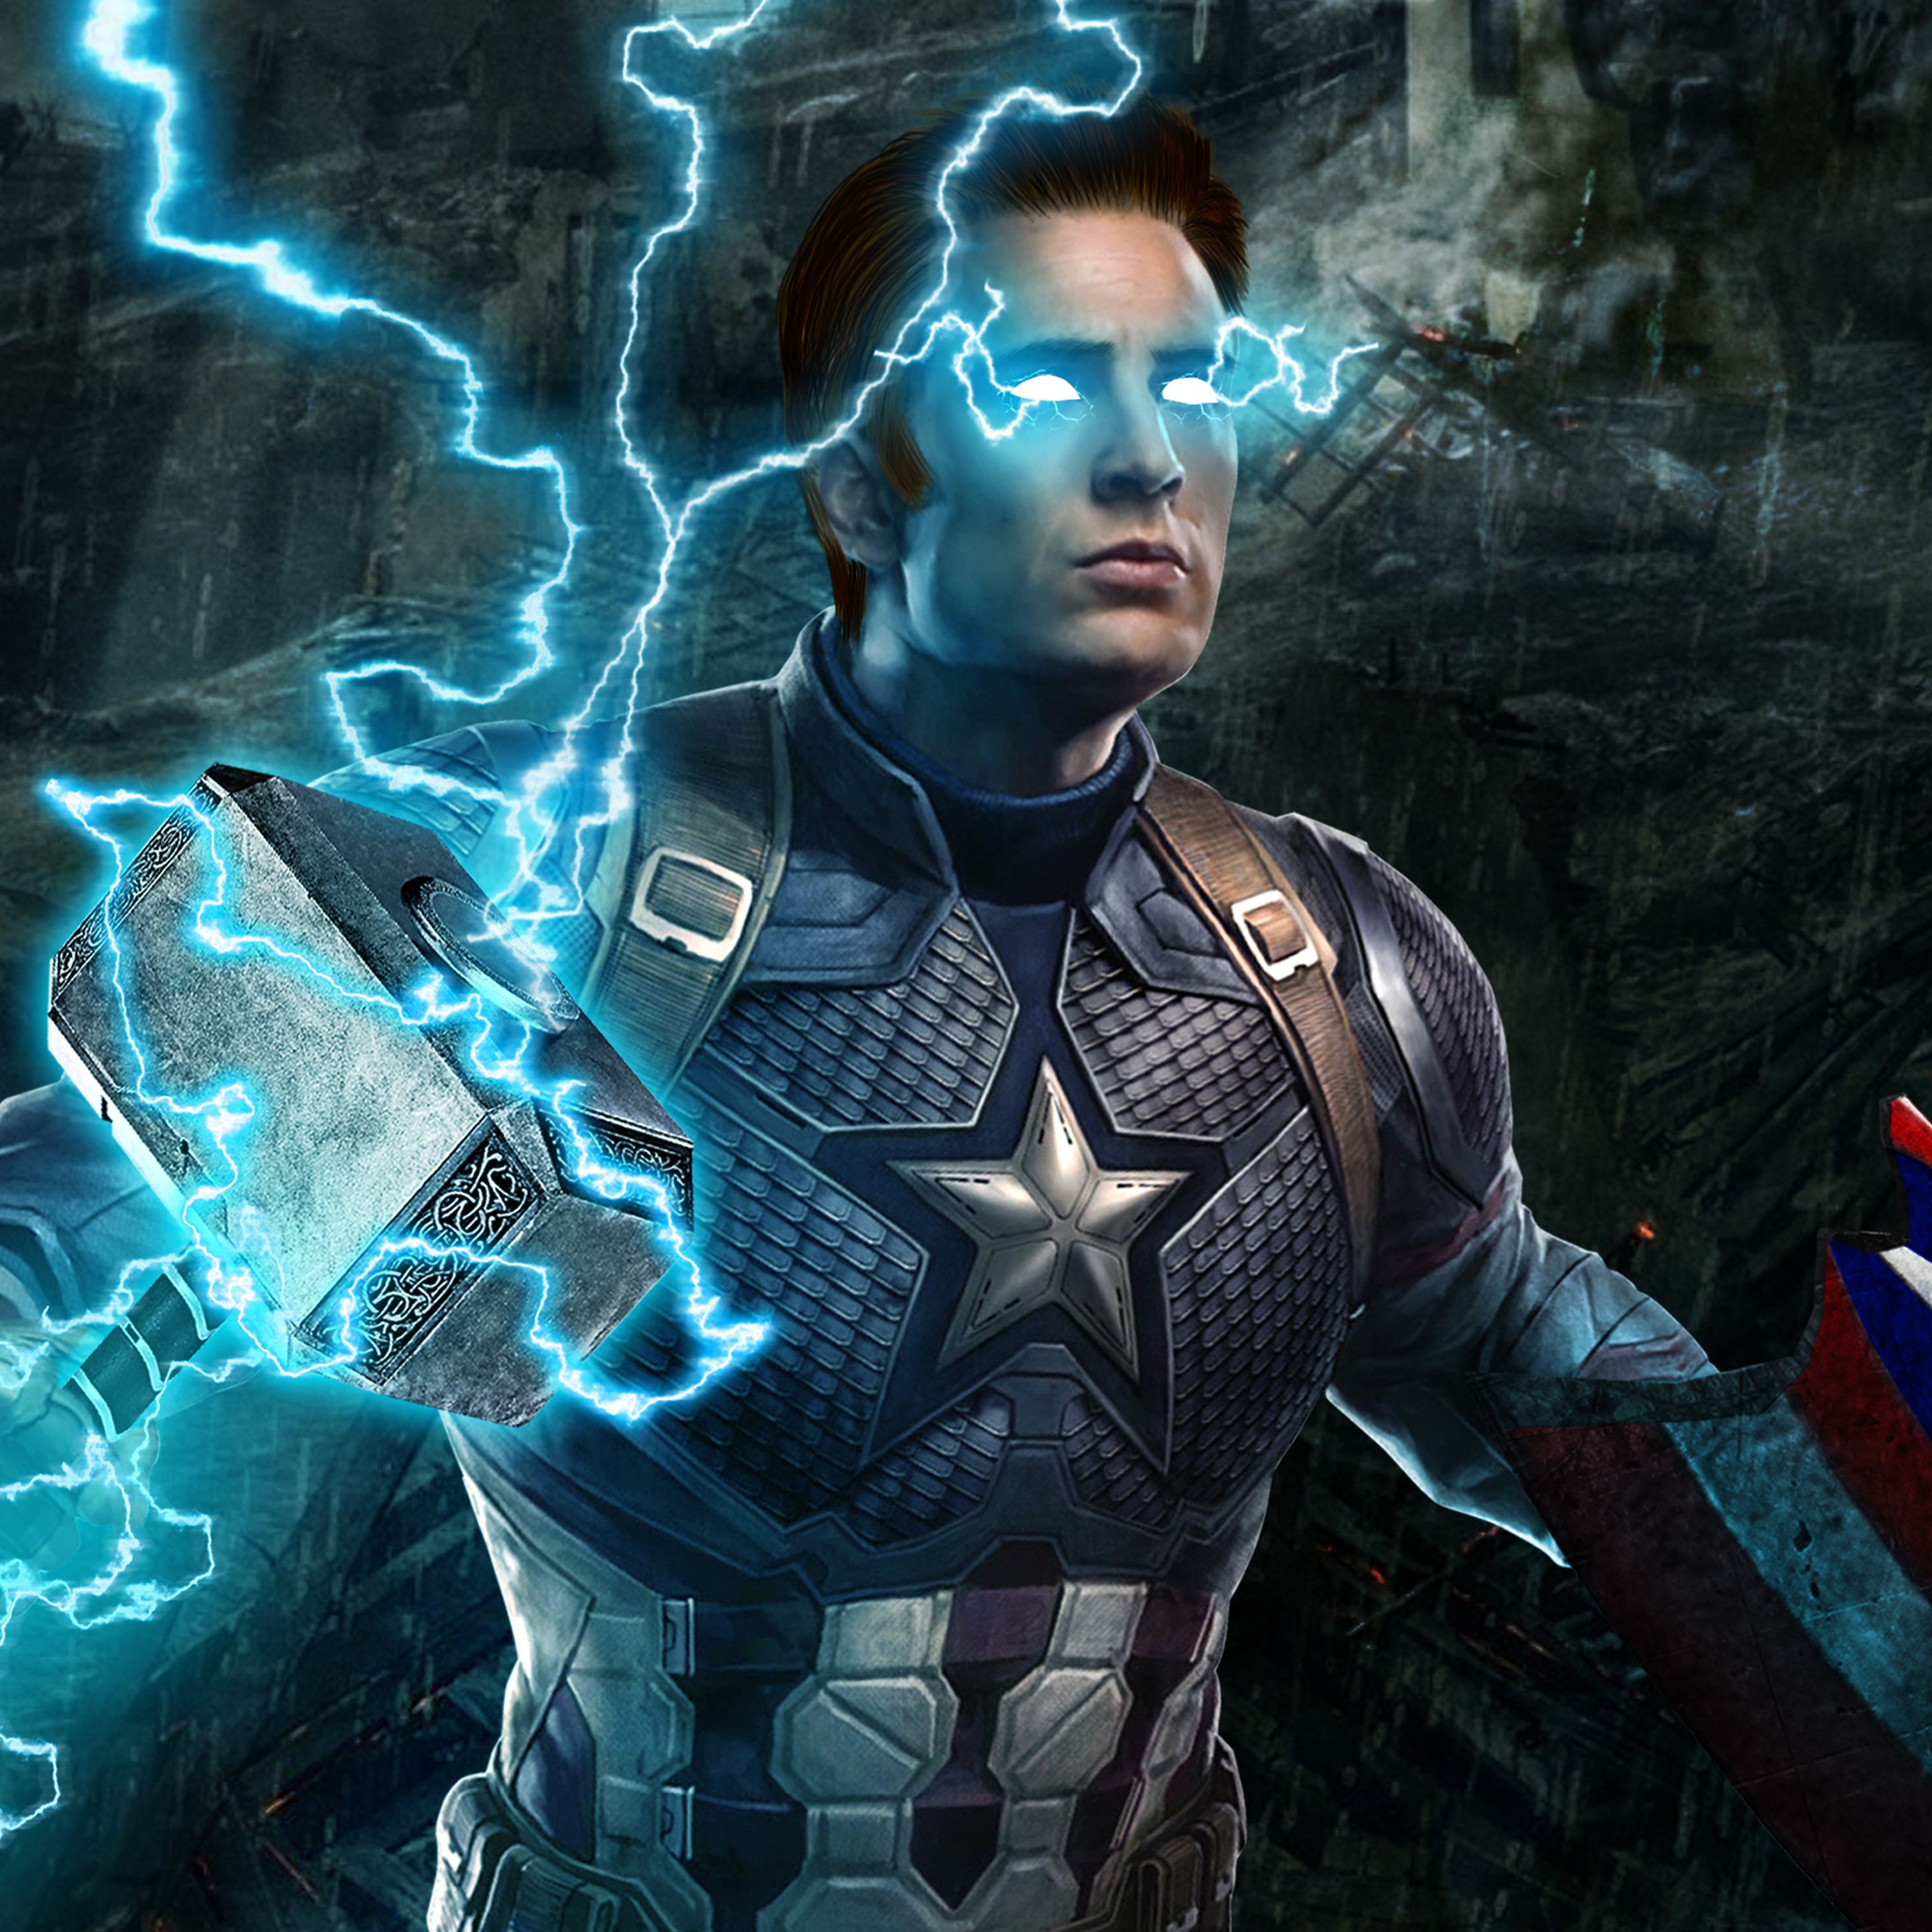 Captain America Mjolnir Avengers Endgame 4k iPad Pro Retina Display HD 4k Wallpaper, Image, Background, Photo and Picture